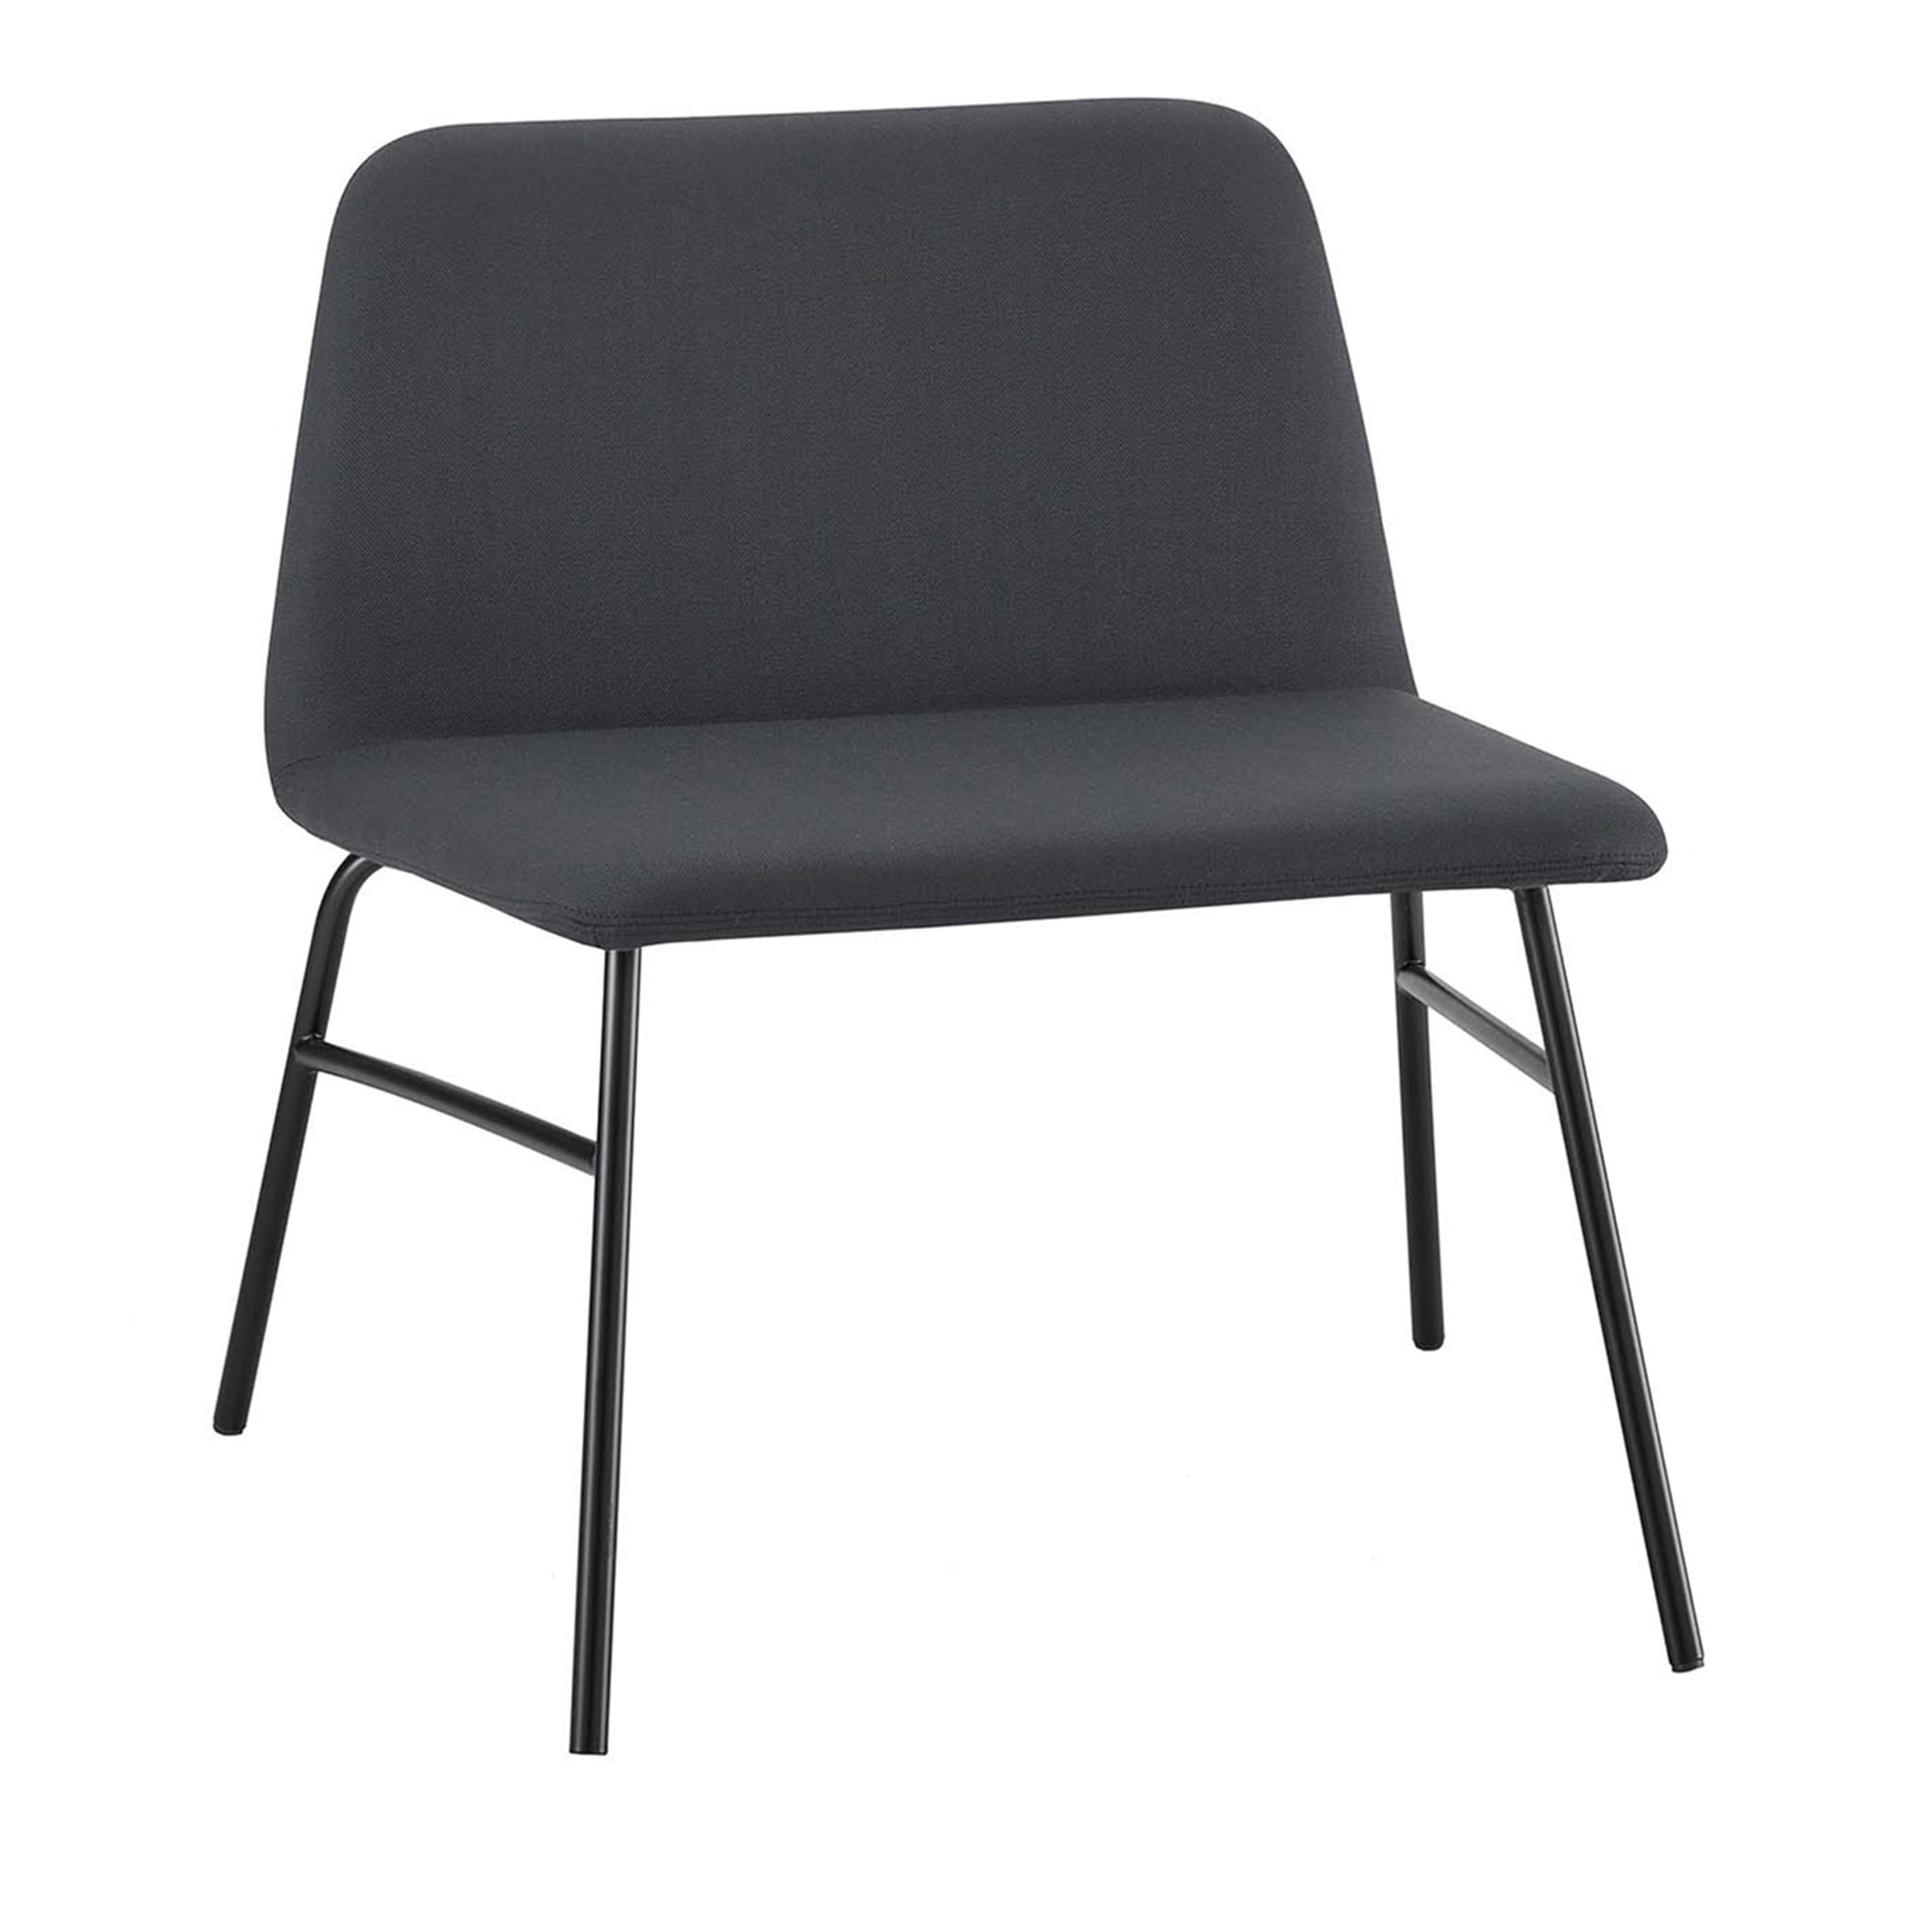 Bardot Met Black Lounge Chair by Emilio Nanni - Main view